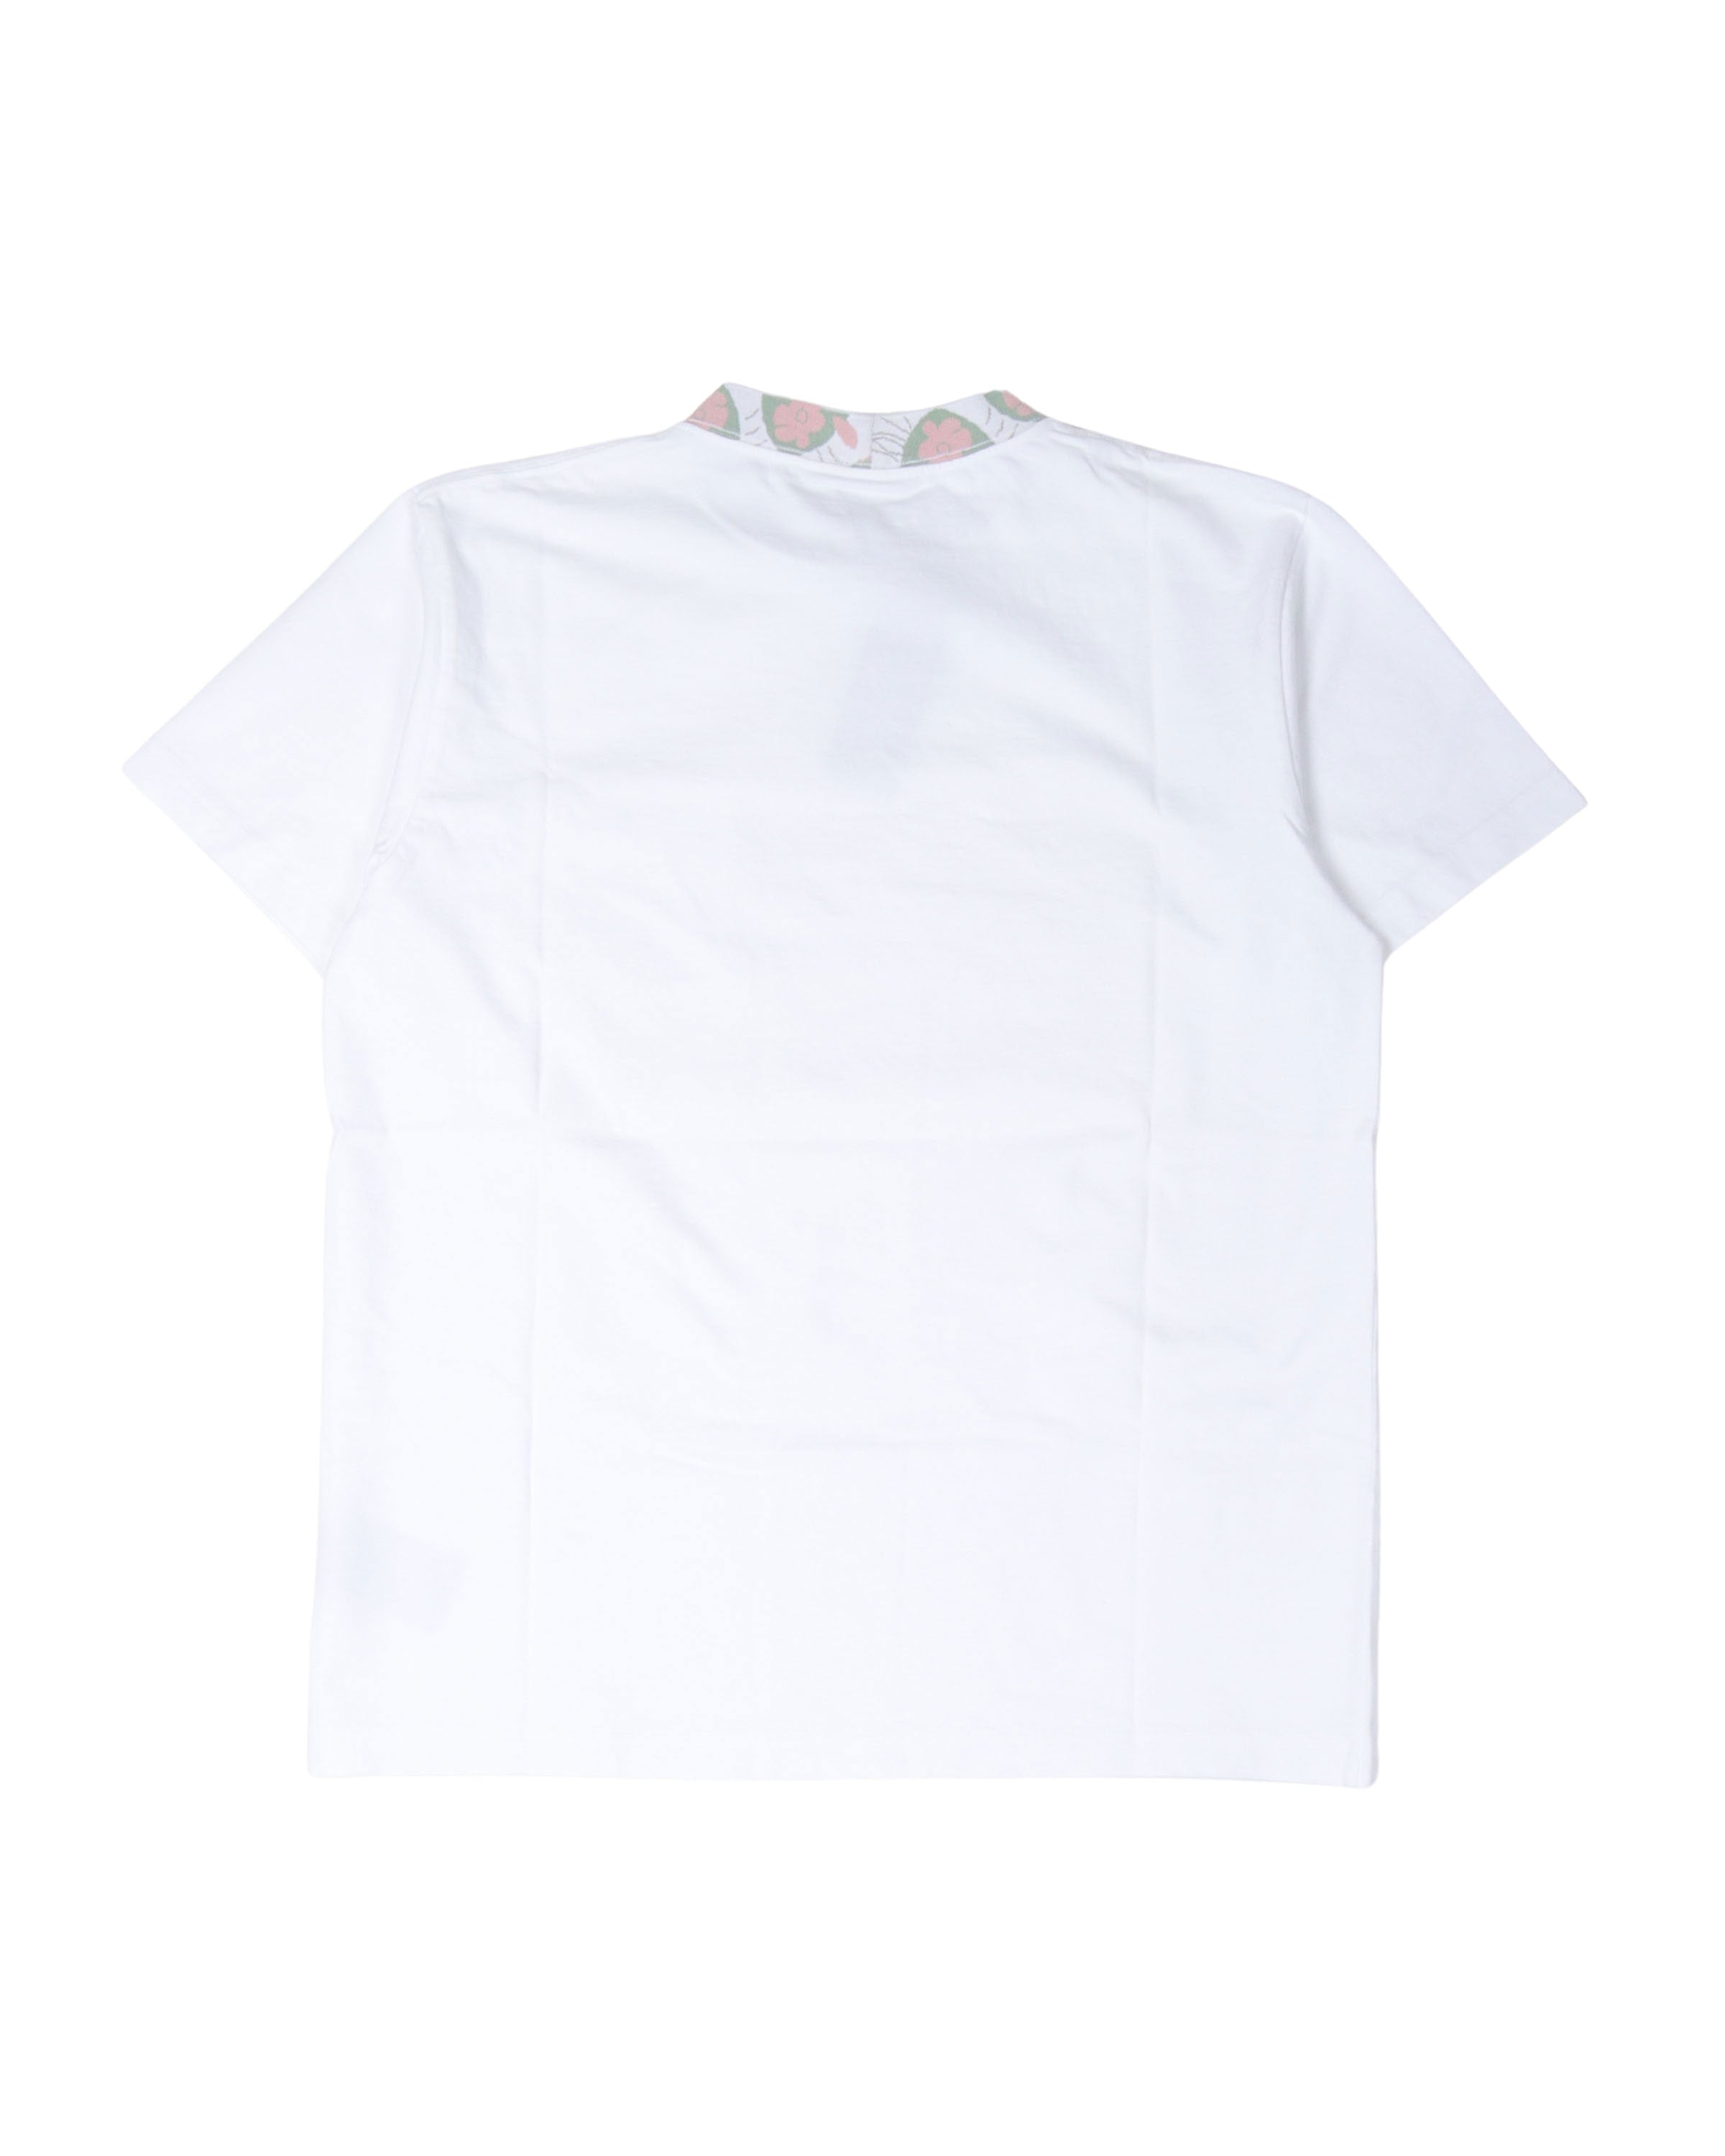 Collar Graphic T-Shirt